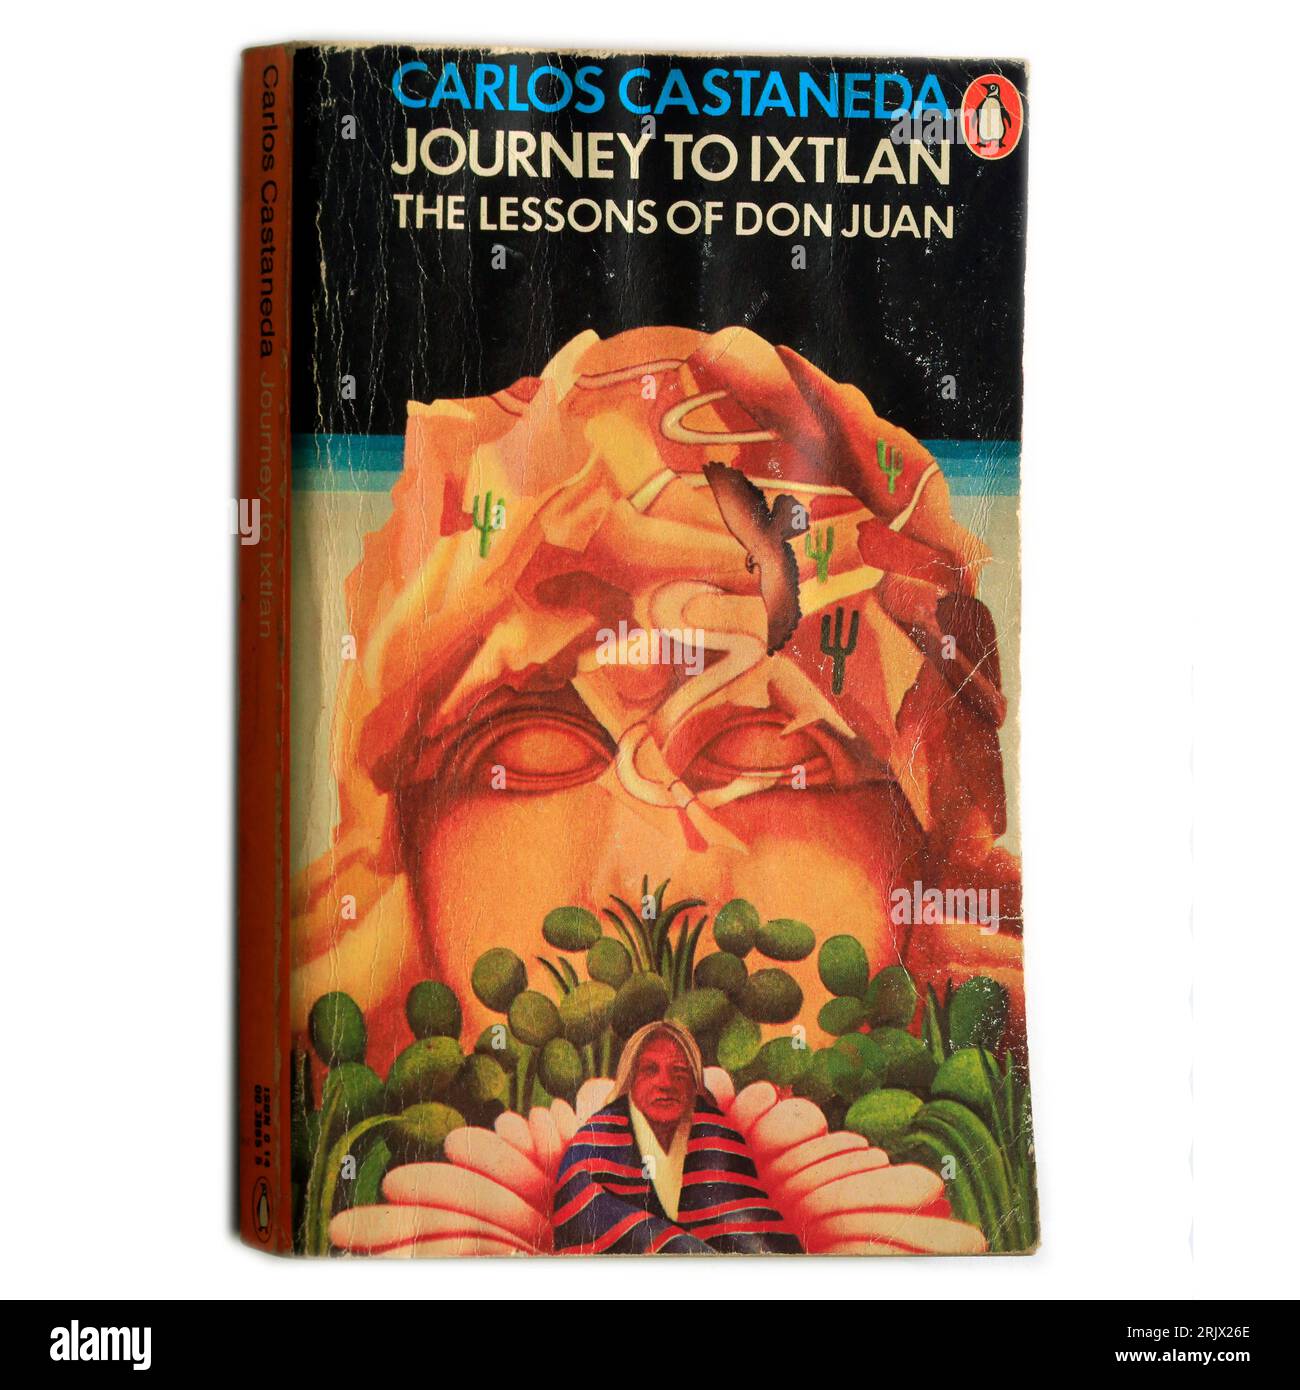 Carlos Castaneda - Journey to Ixtlan, The Lessons of Don Juan. Book cover. Studio set up. Stock Photo